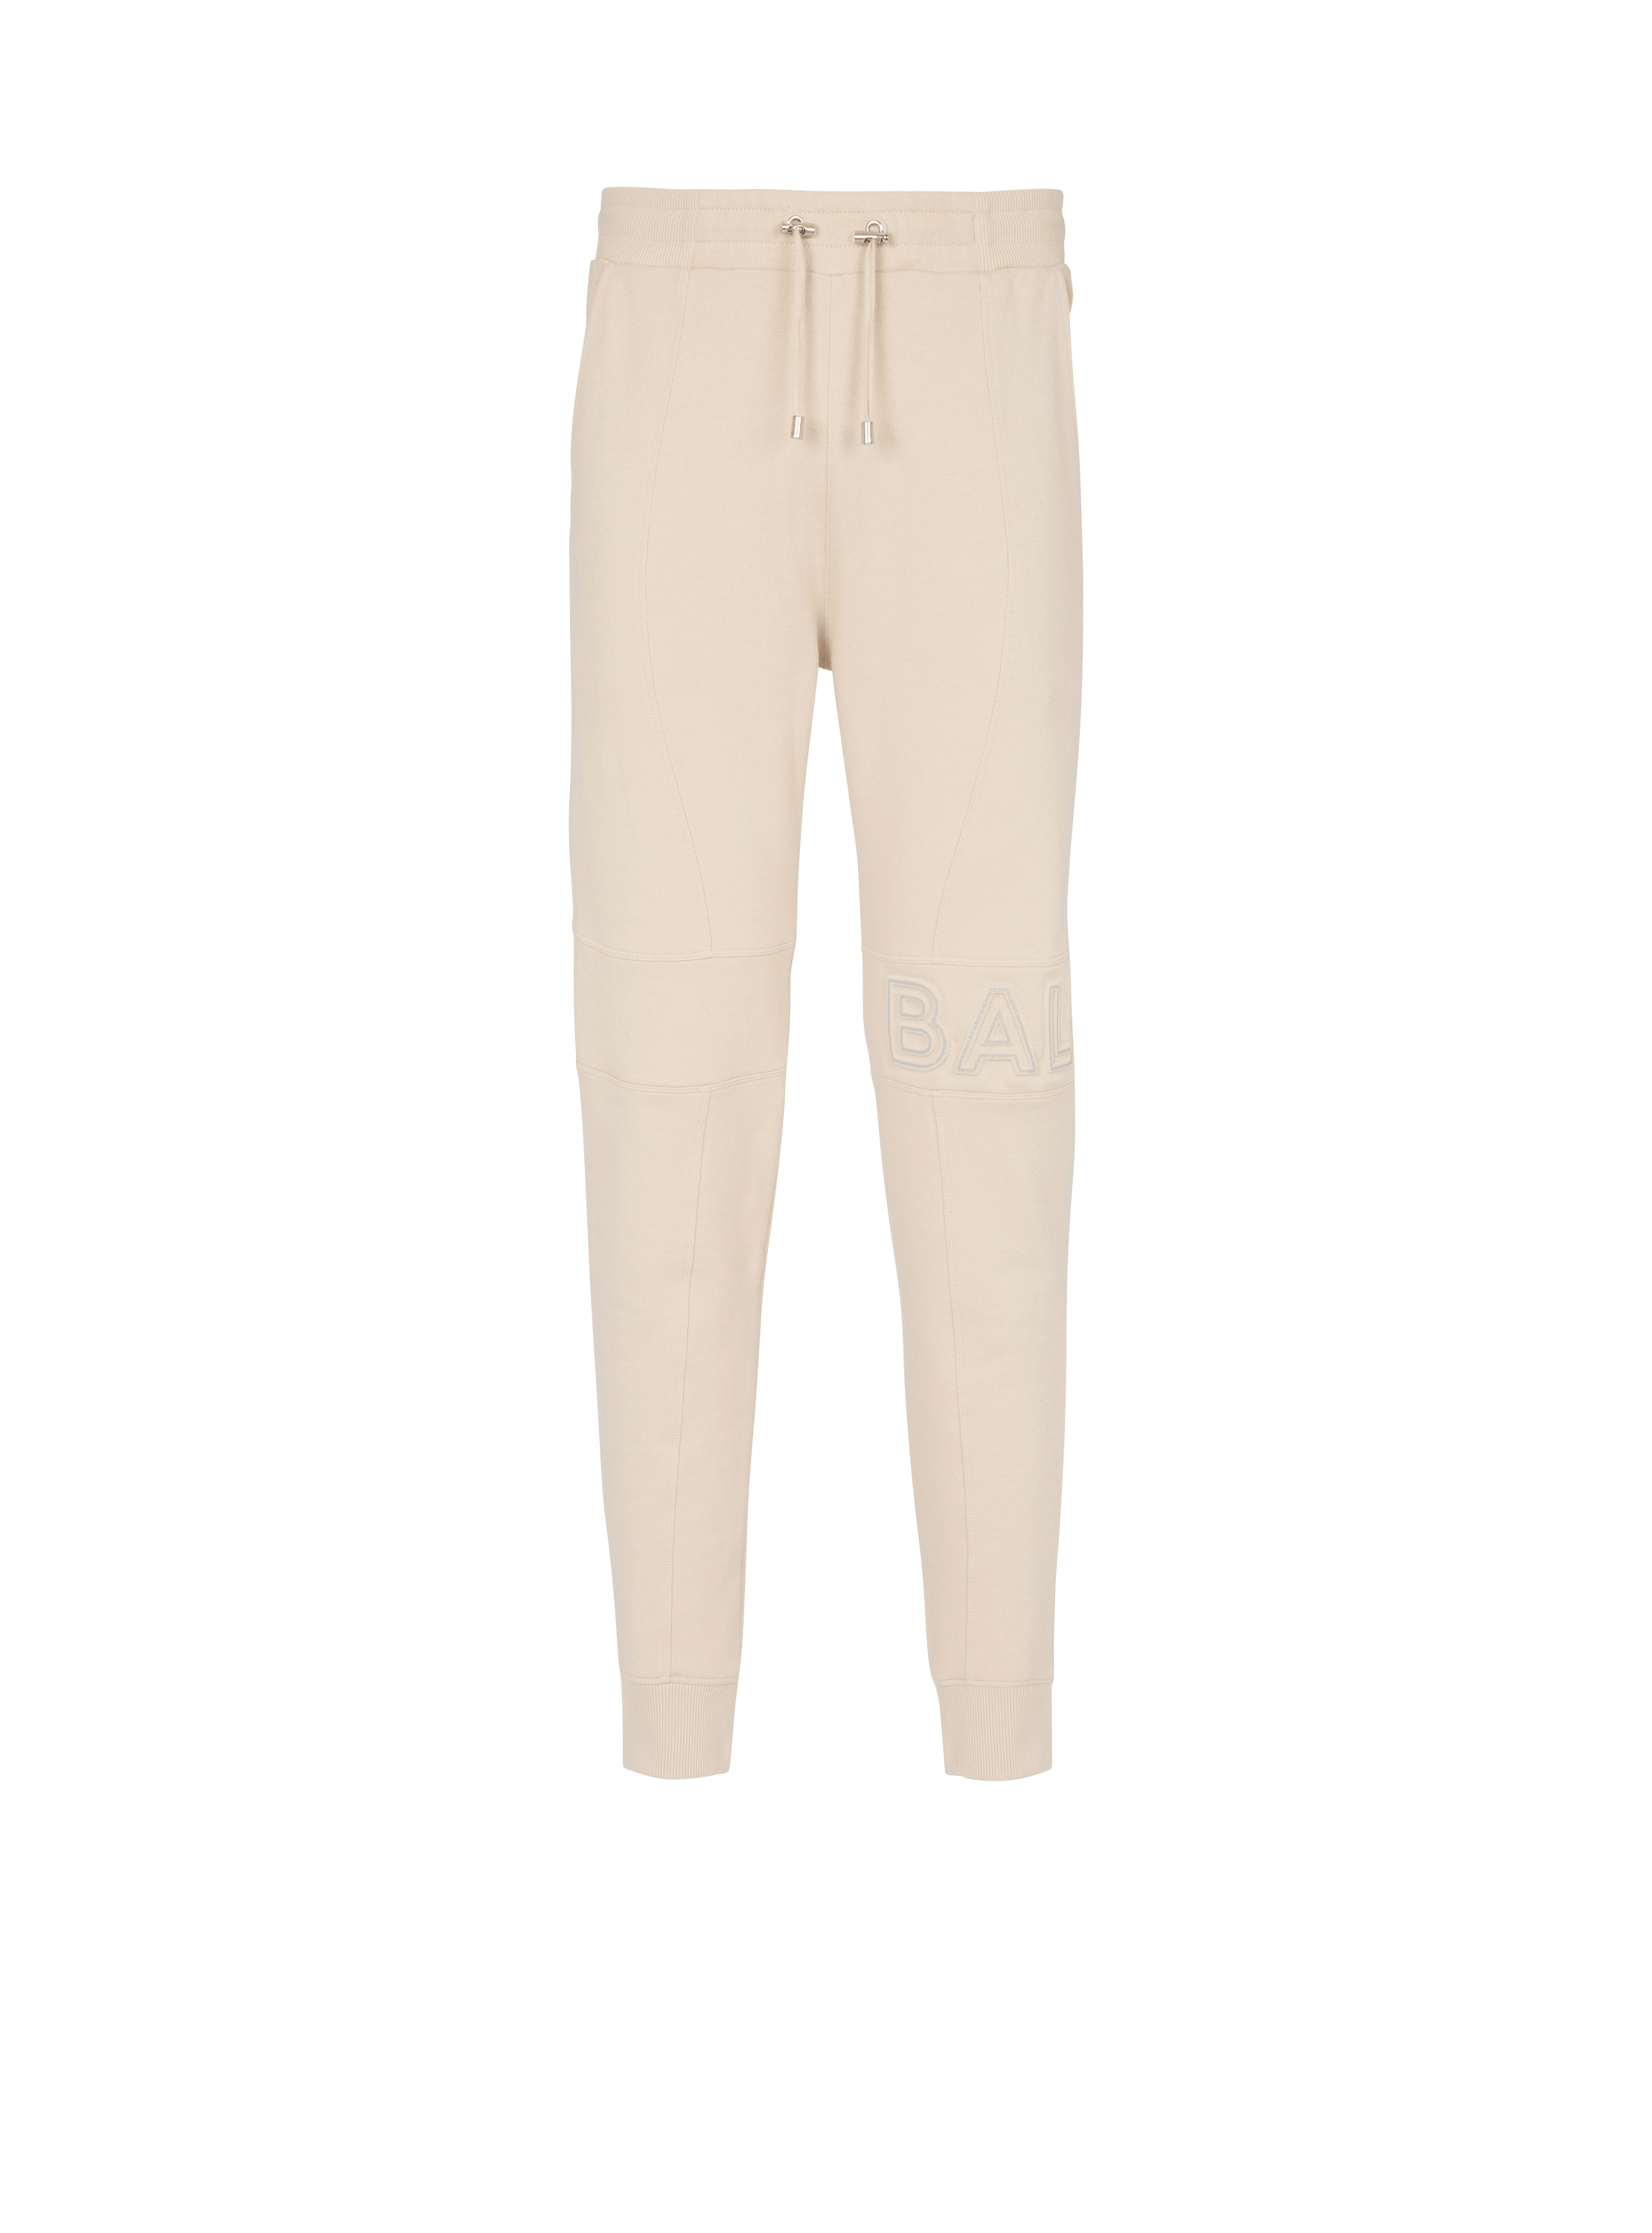 Pantalones de deporte Balmain reflectantes, beis, hi-res